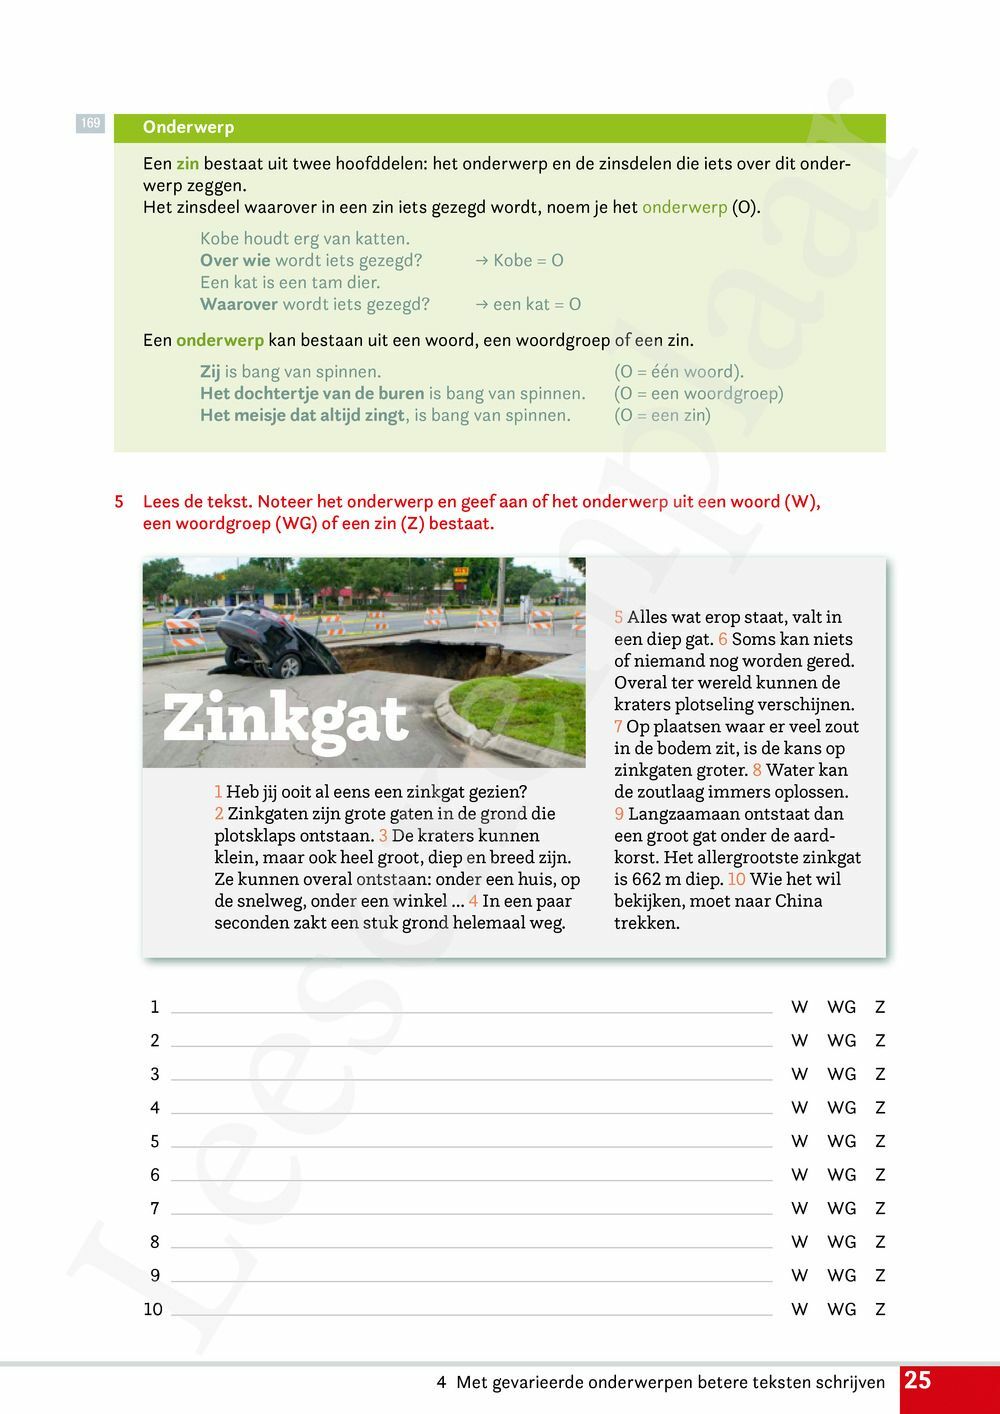 Preview: Campus Nederlands 1 Werkboek (incl. Pelckmans Portaal)